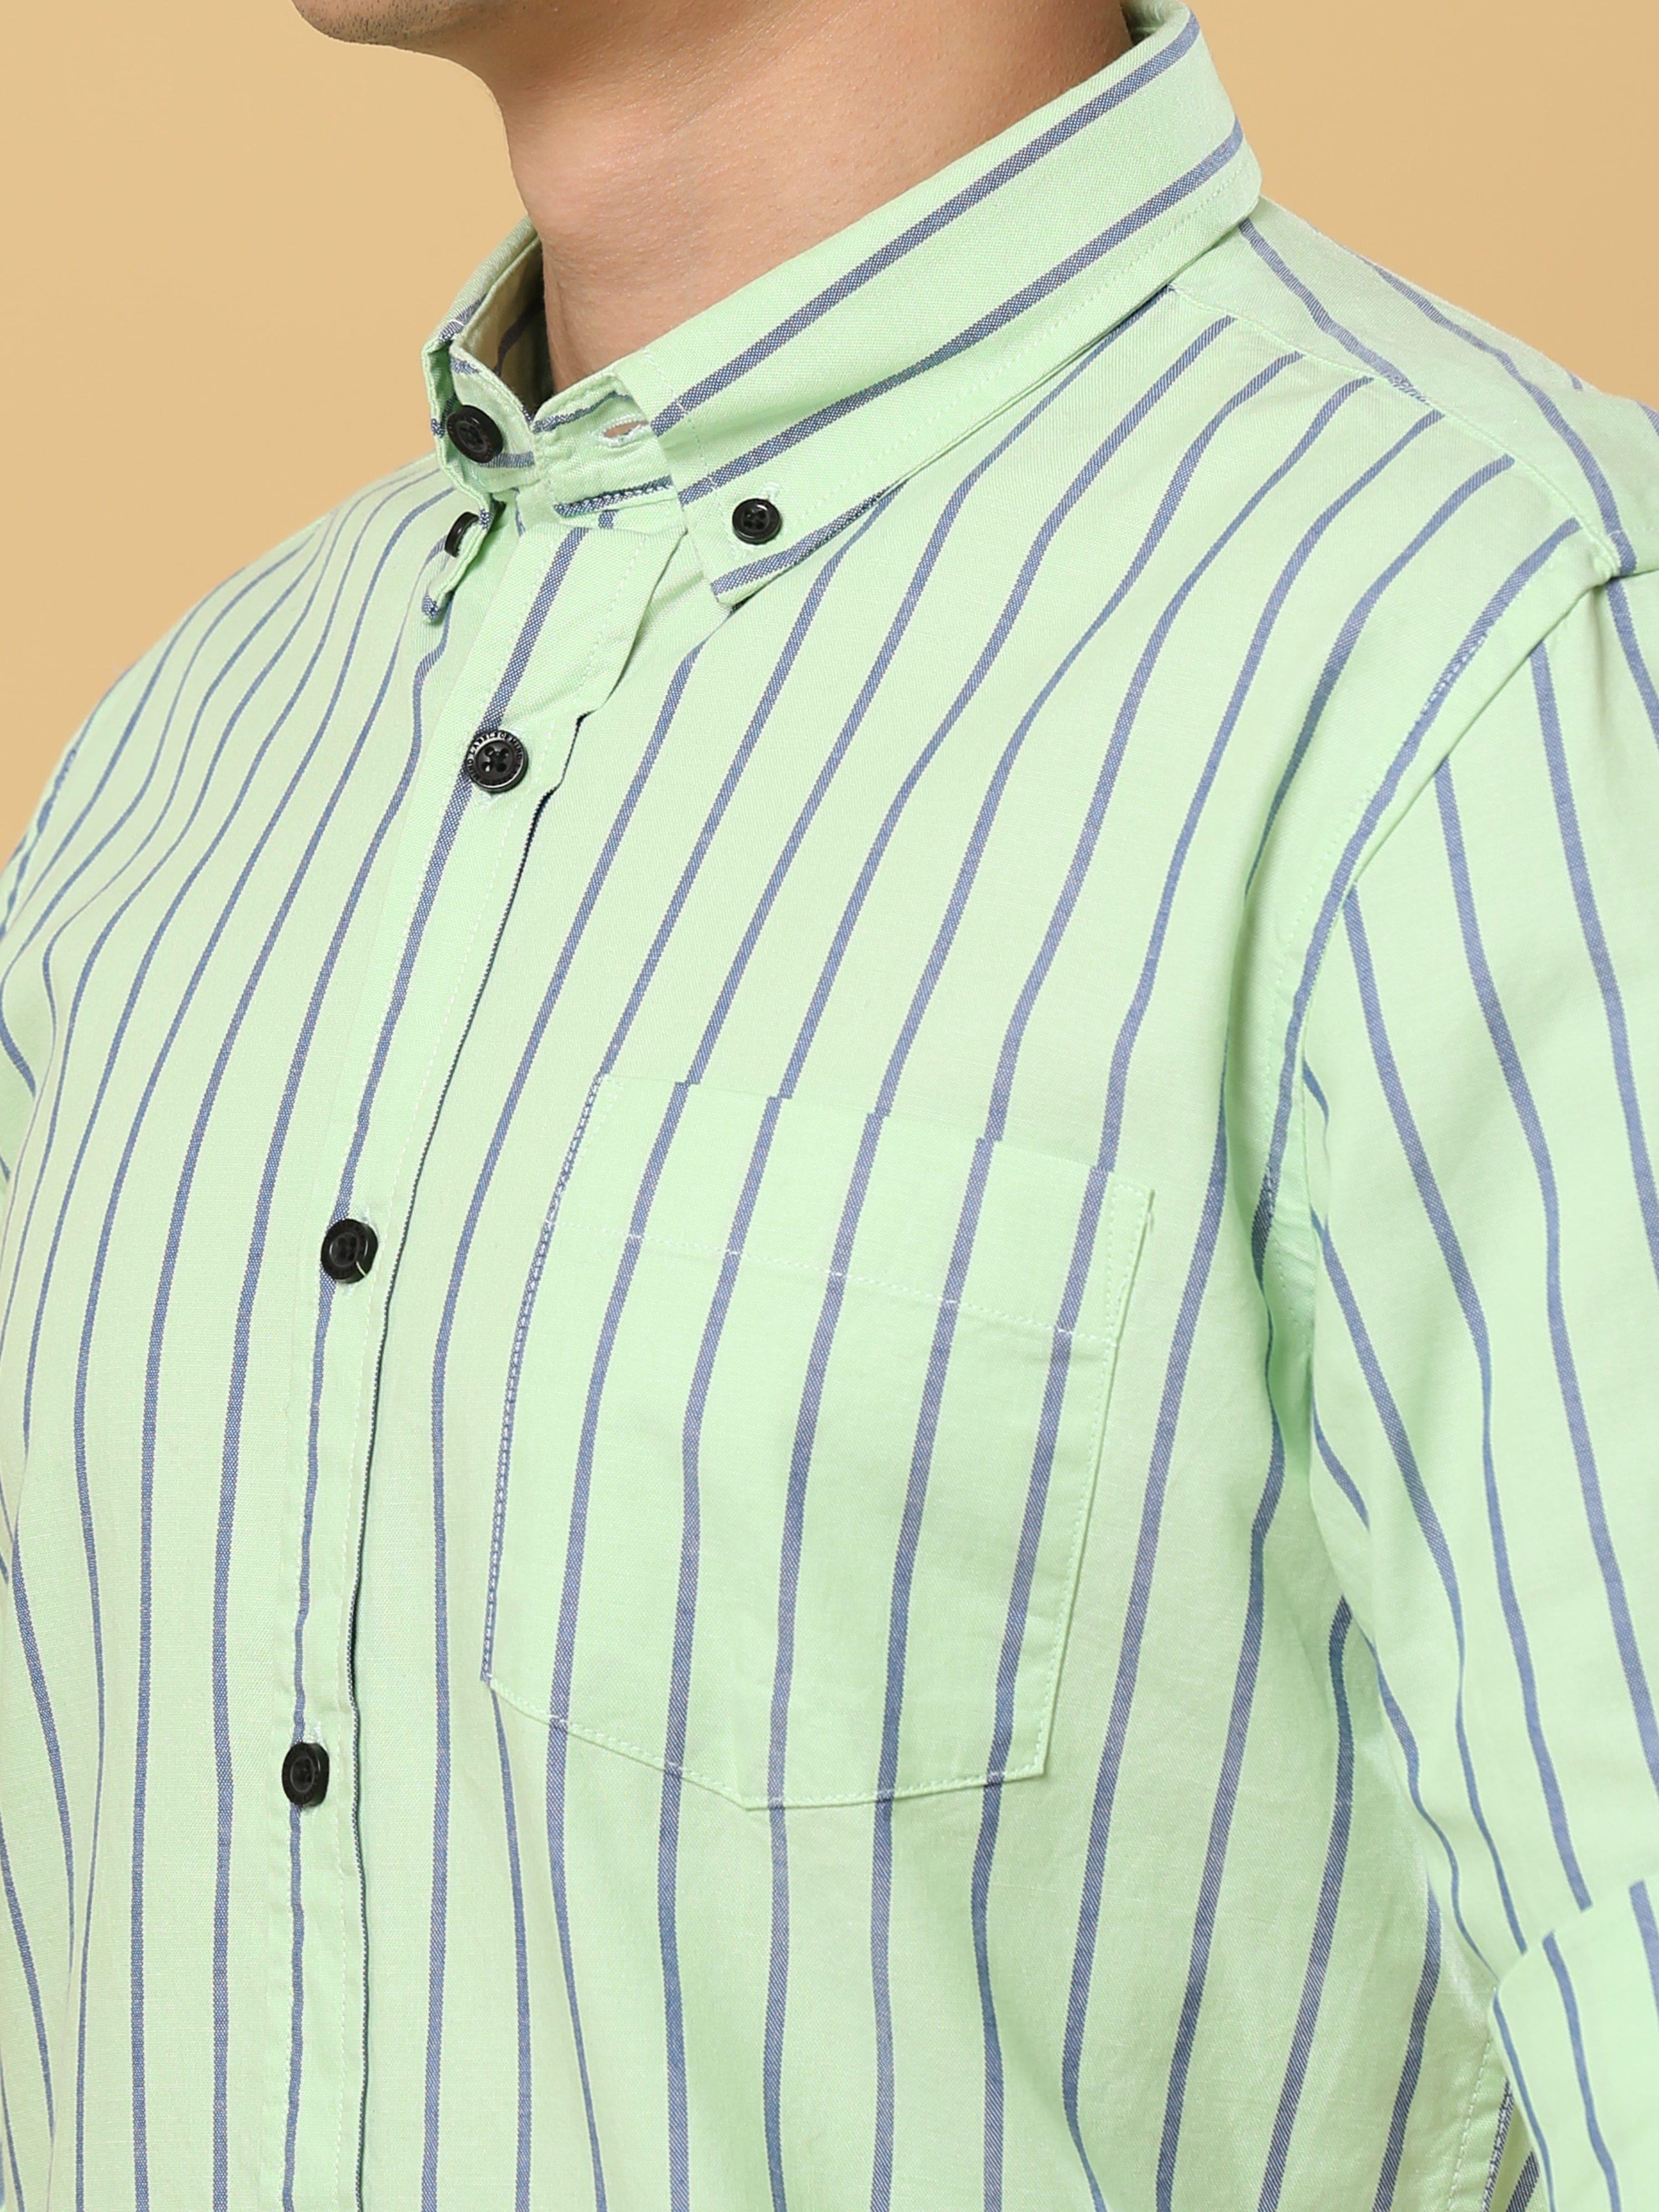 Shop Latest Oxford Striped Slim Fit ShirtRs. 1019.00